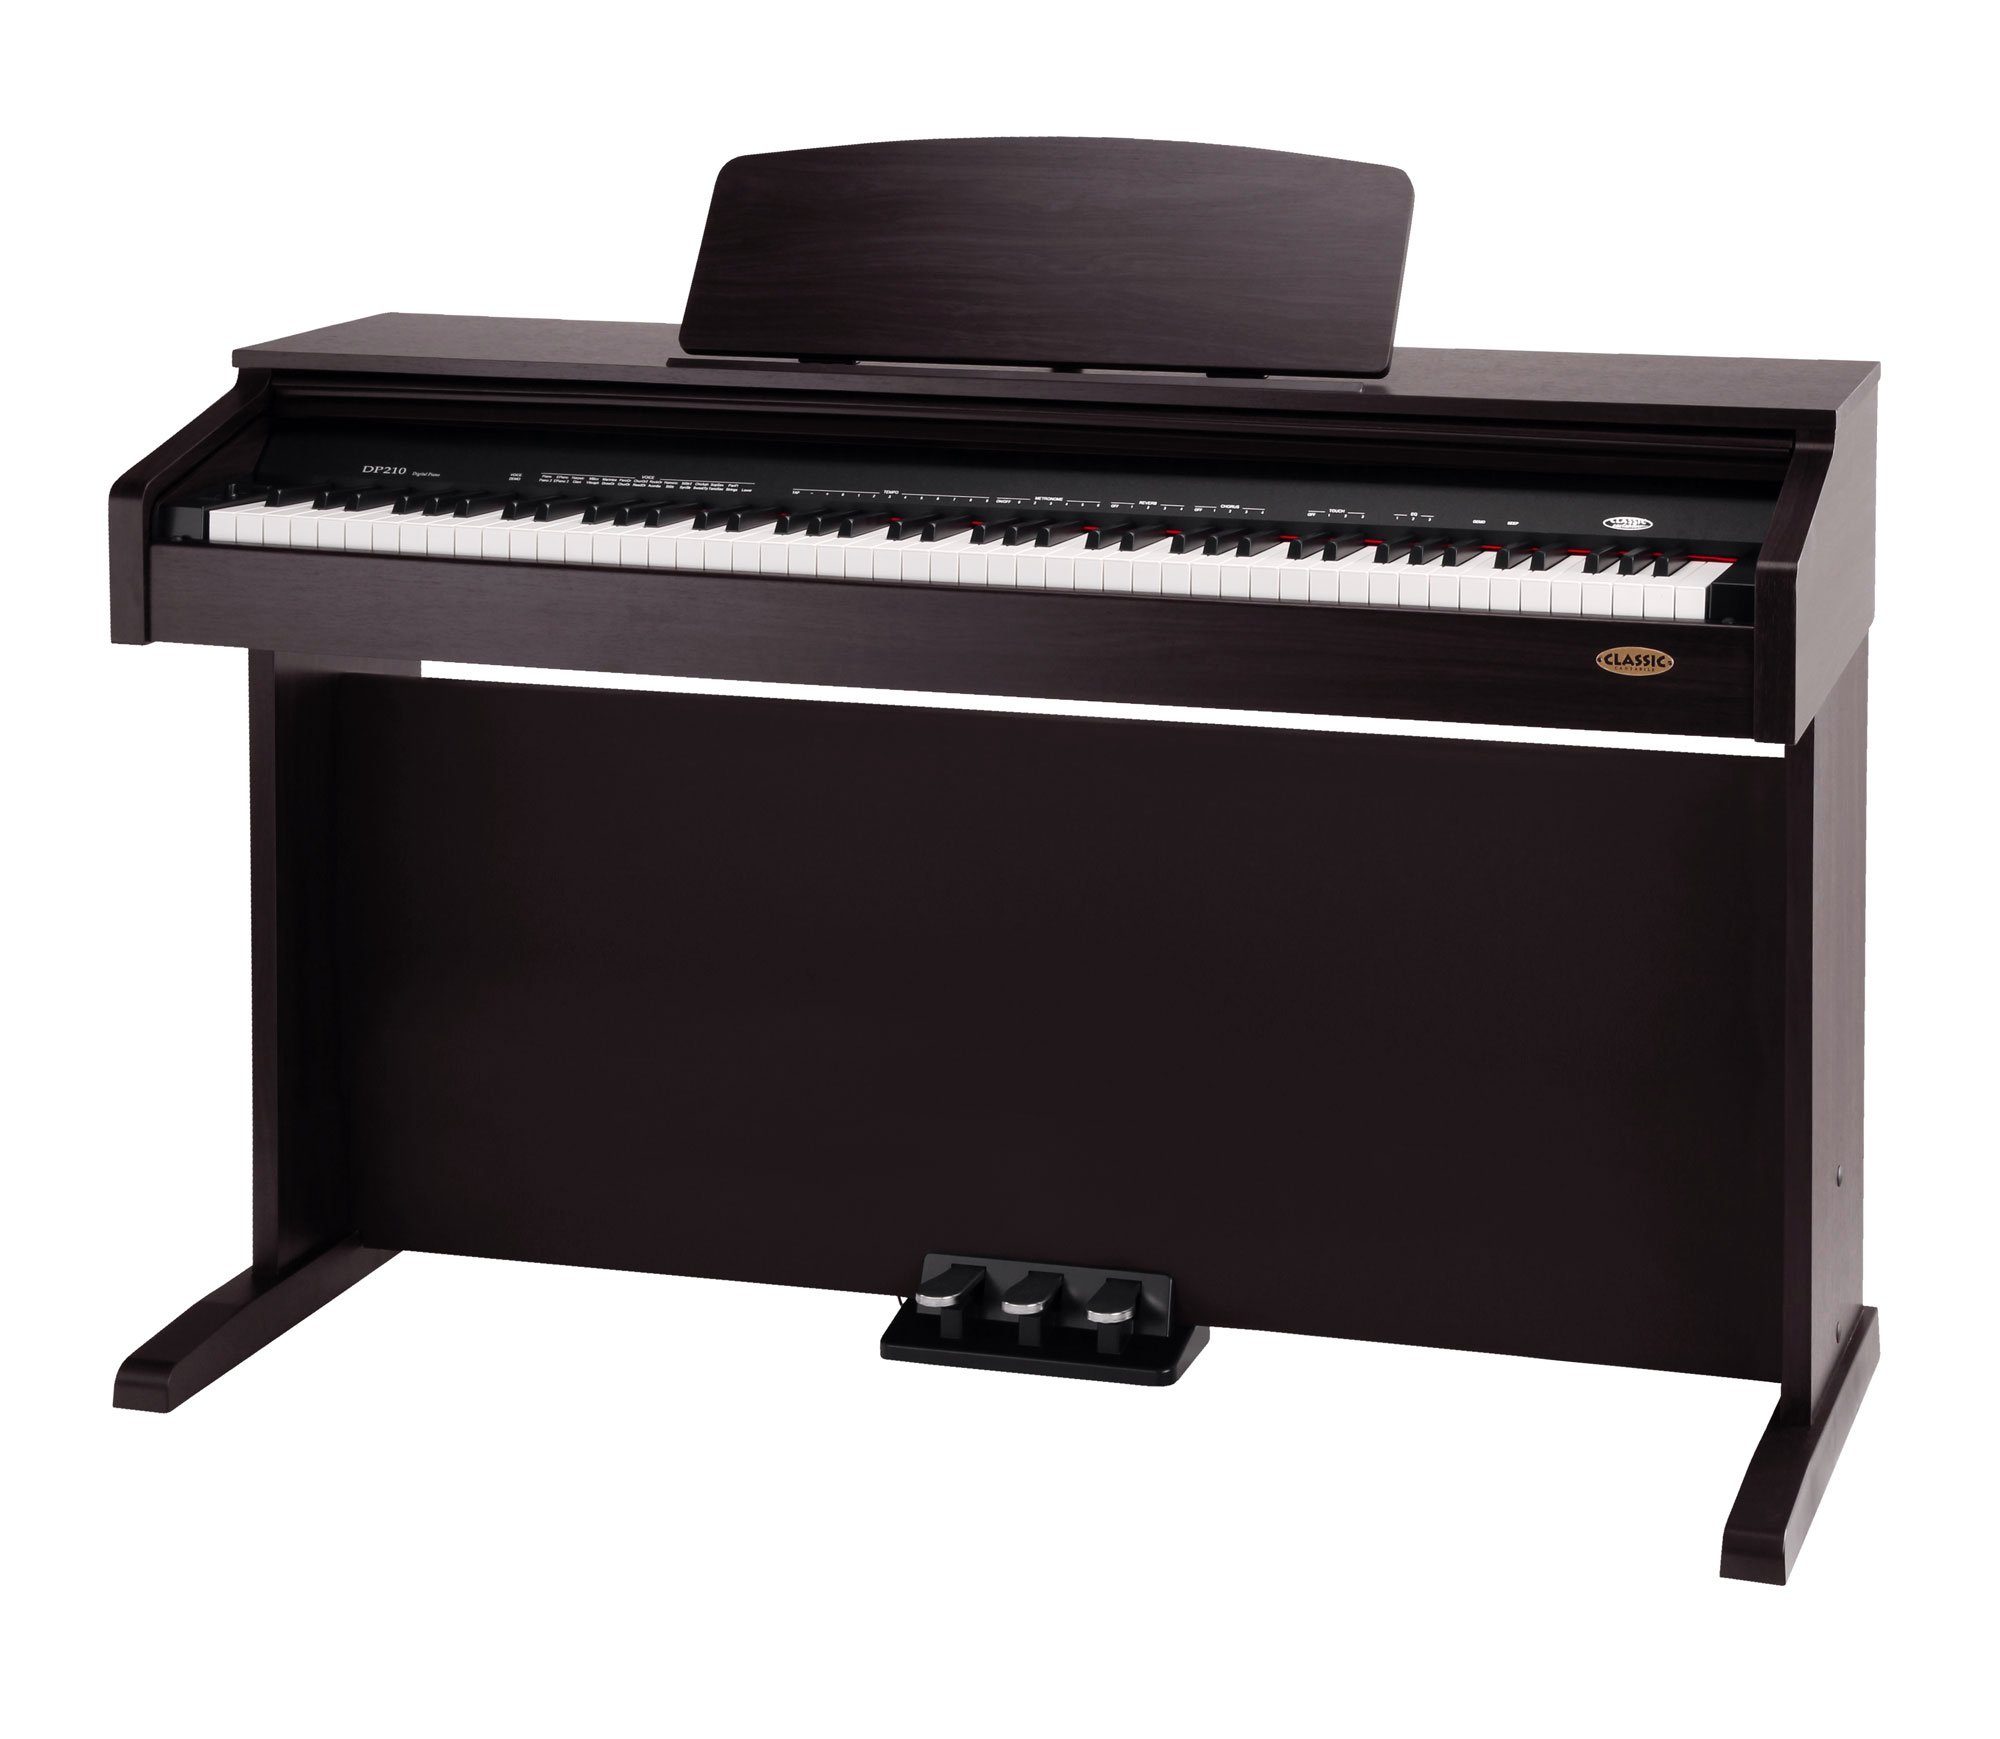 Classic Cantabile Digitalpiano DP-210 E-Piano mit 88 Tasten Hammermechanik,  Dual Mode/Split Mode (Layer-Funktion) und USB